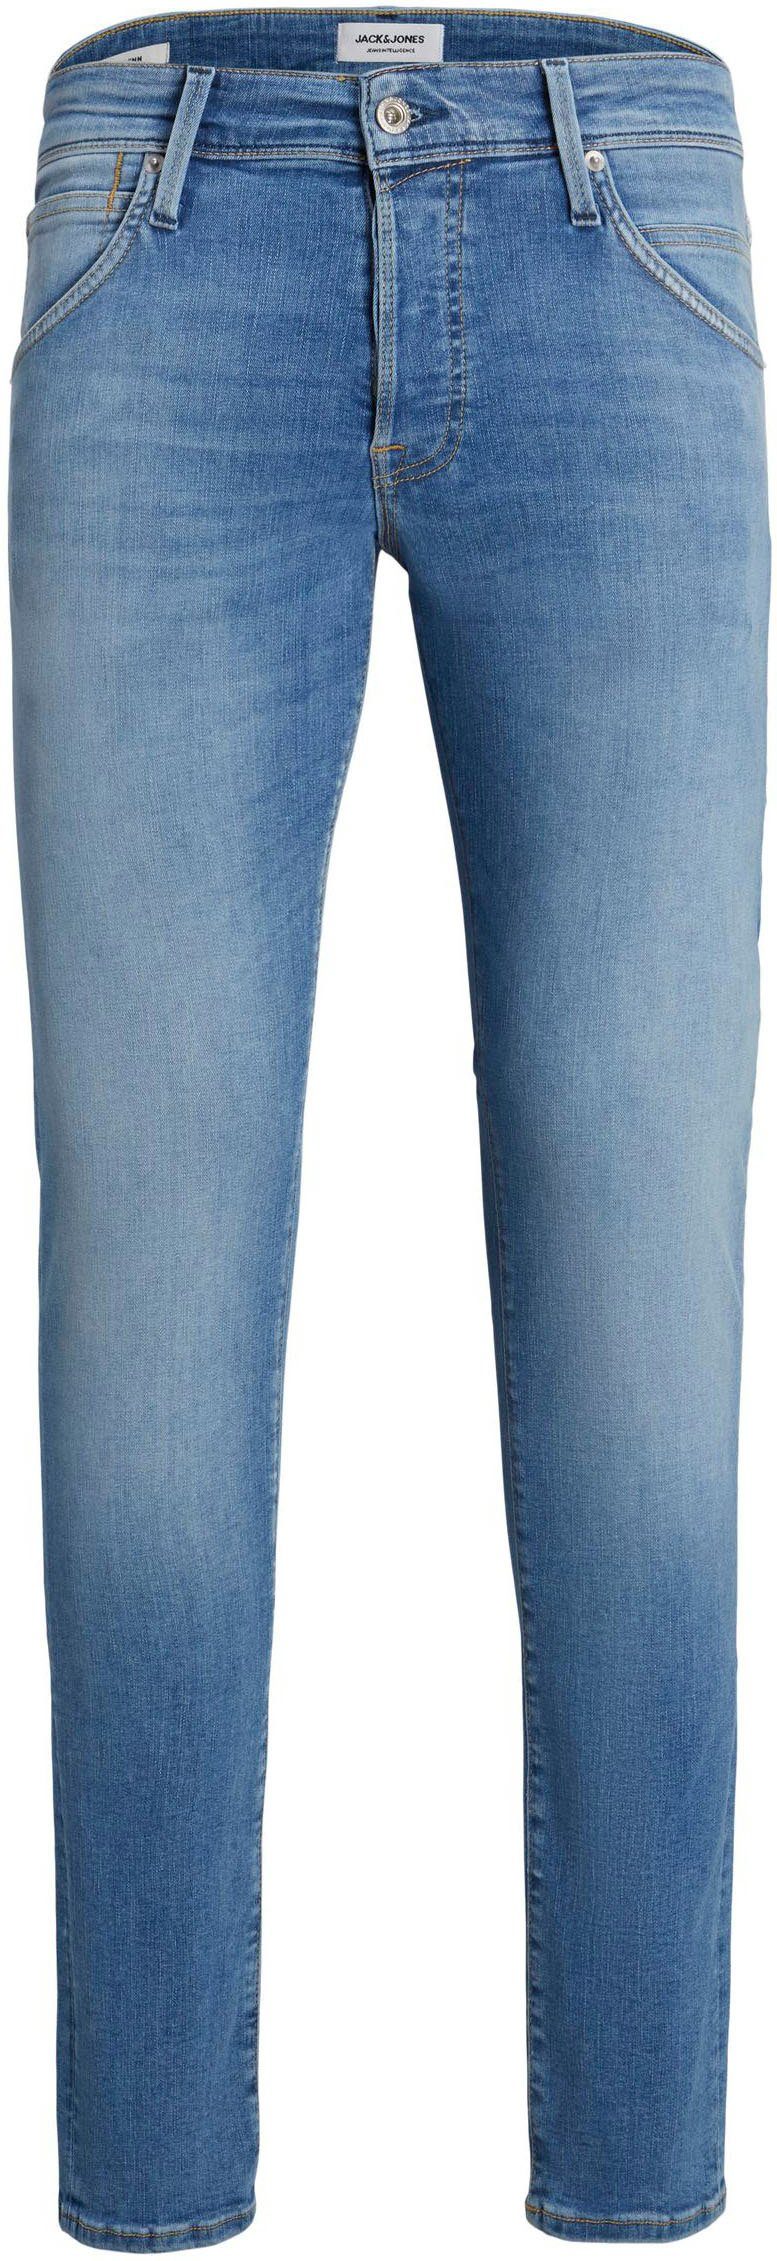 Jack & Jones Skinny-fit-Jeans JJILIAM JJORIGINAL JOS 047 50SPS, Perfekte  Passform durch den Elasthananteil